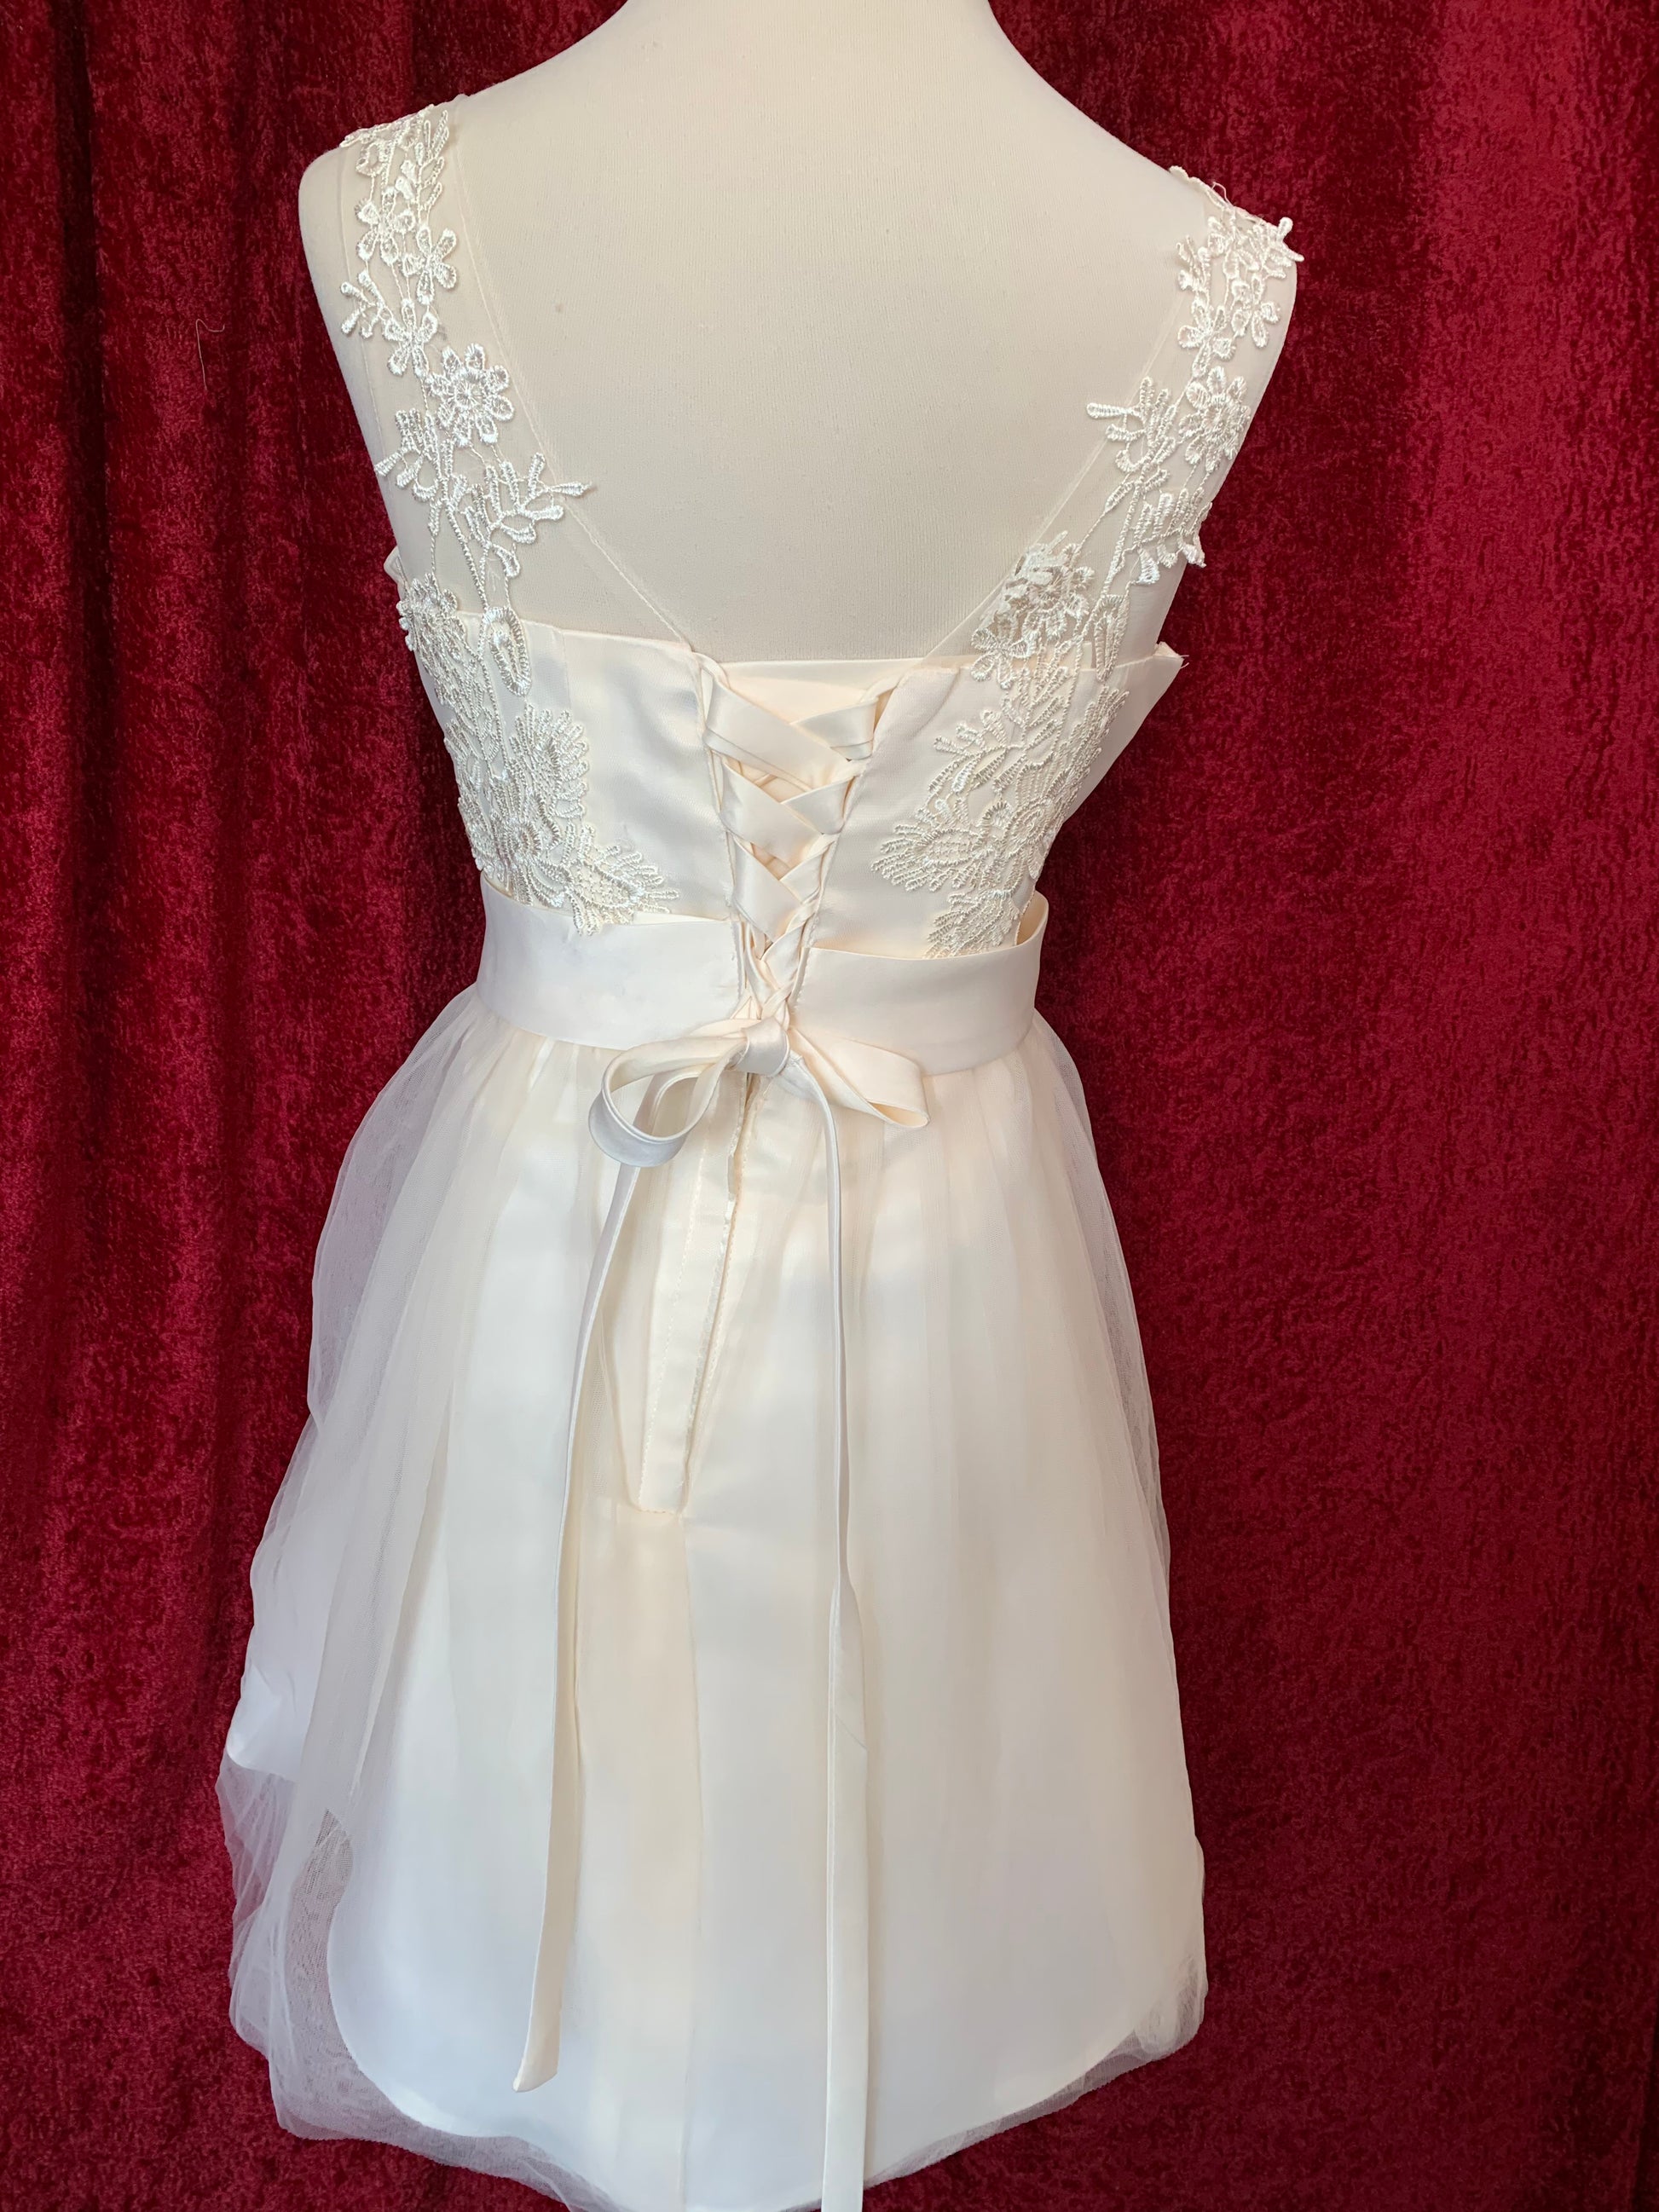 Short Tulle Dress Size 10 Style HJZY65 - MISS LESTER'S 